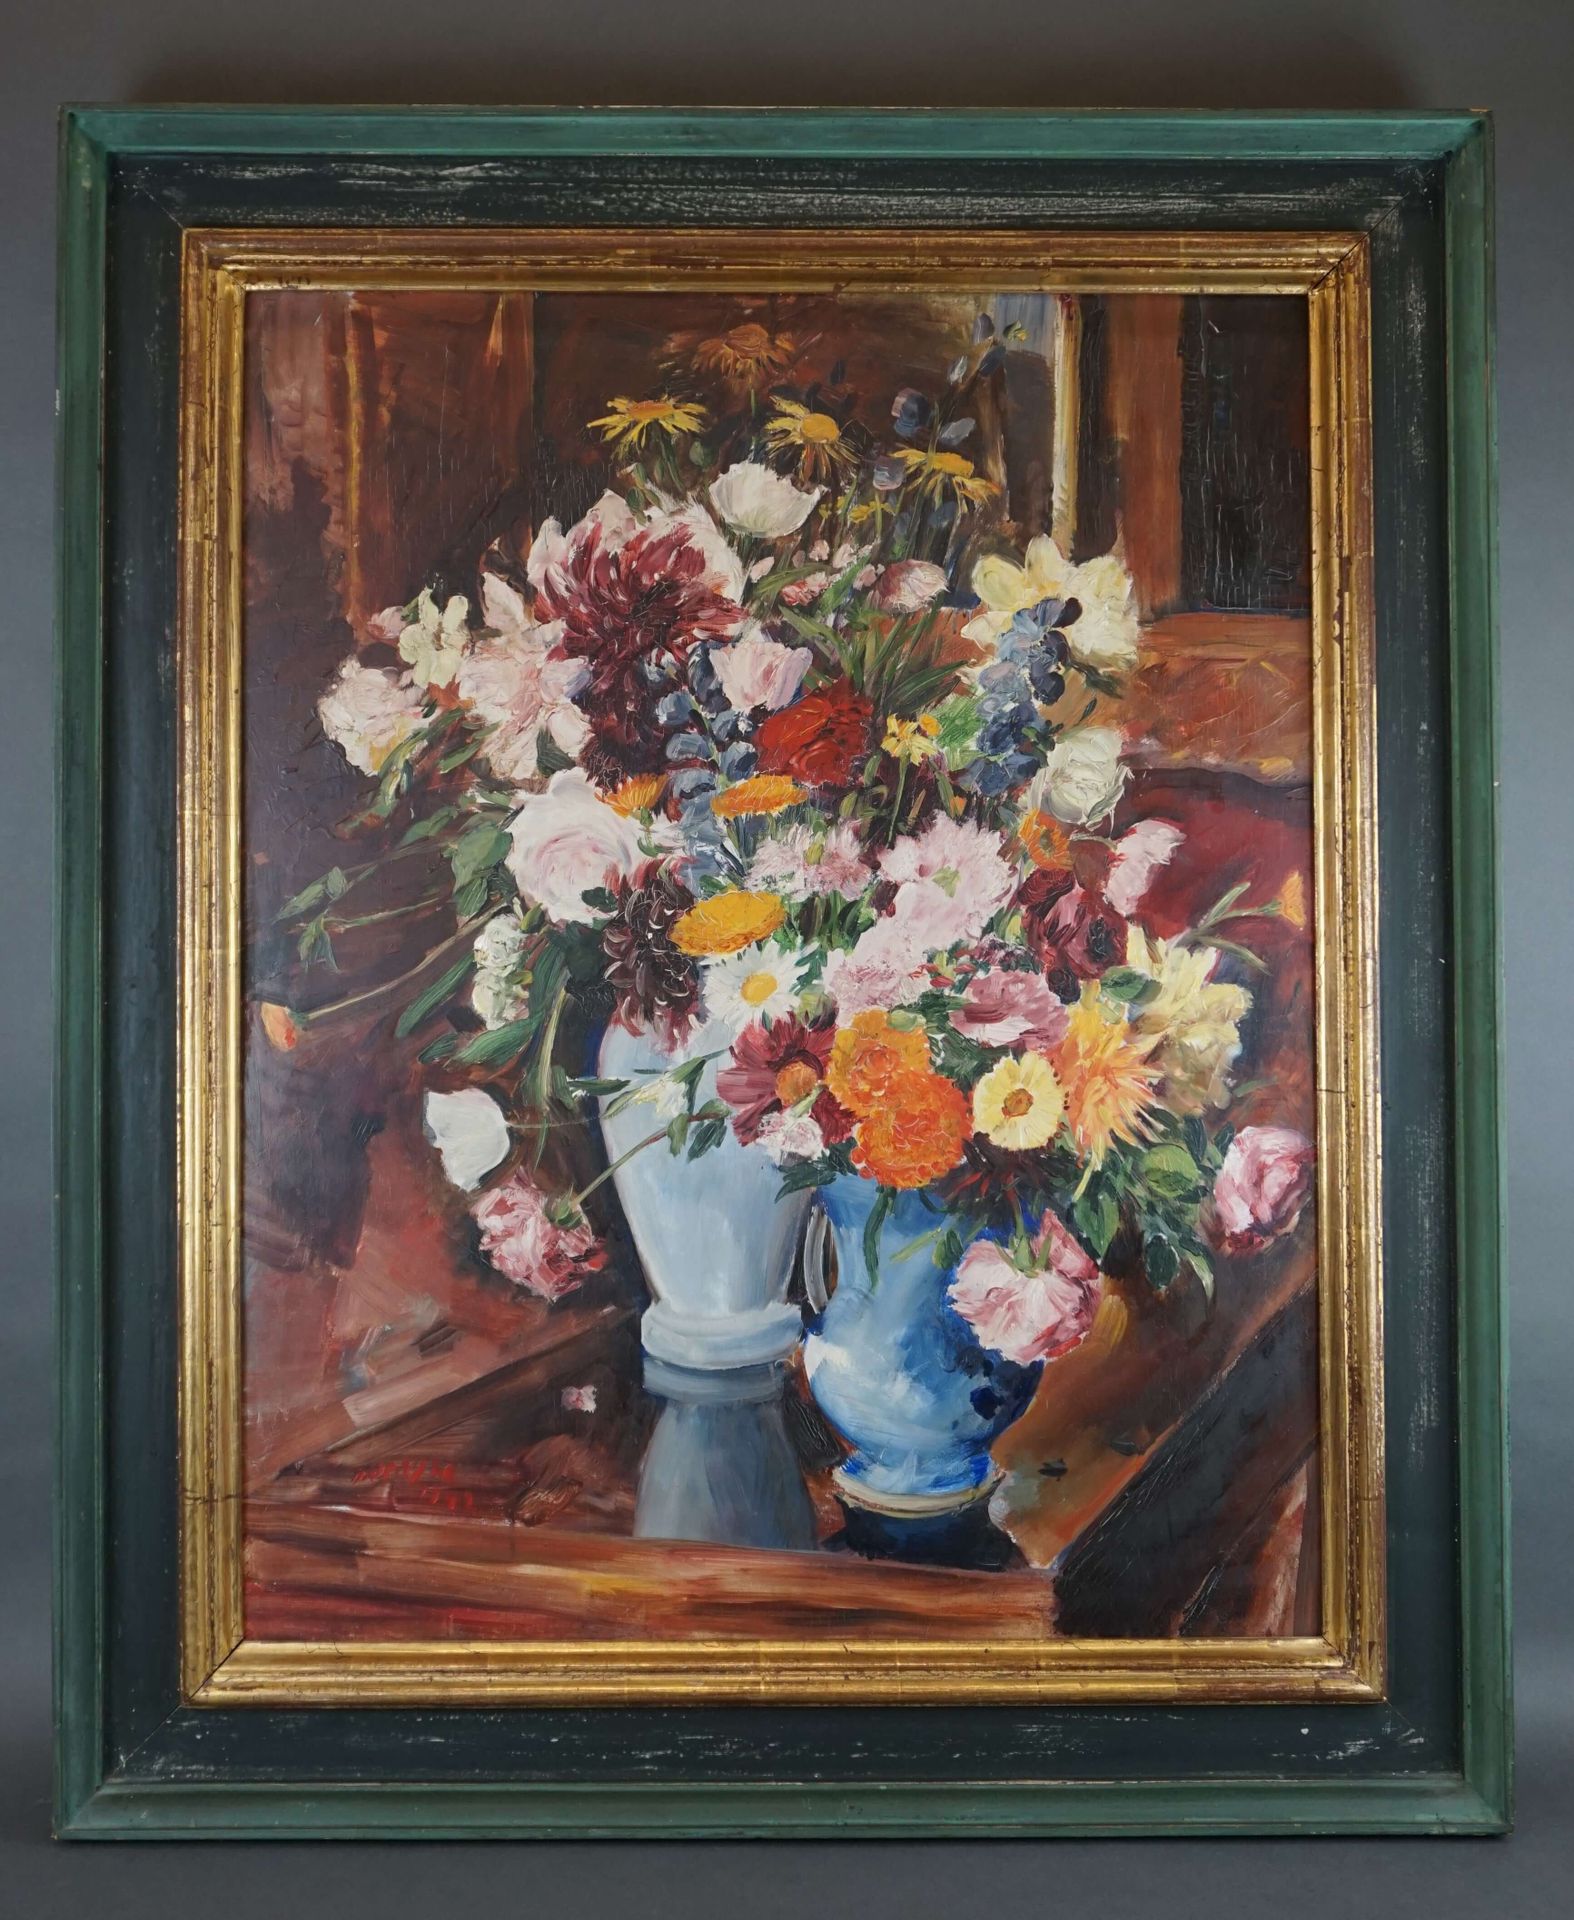 DUPAGNE Adrien (1889-1980) 签名为Dupagne "Vase fleuri "的板上油画。日期为1942年。83x69厘米